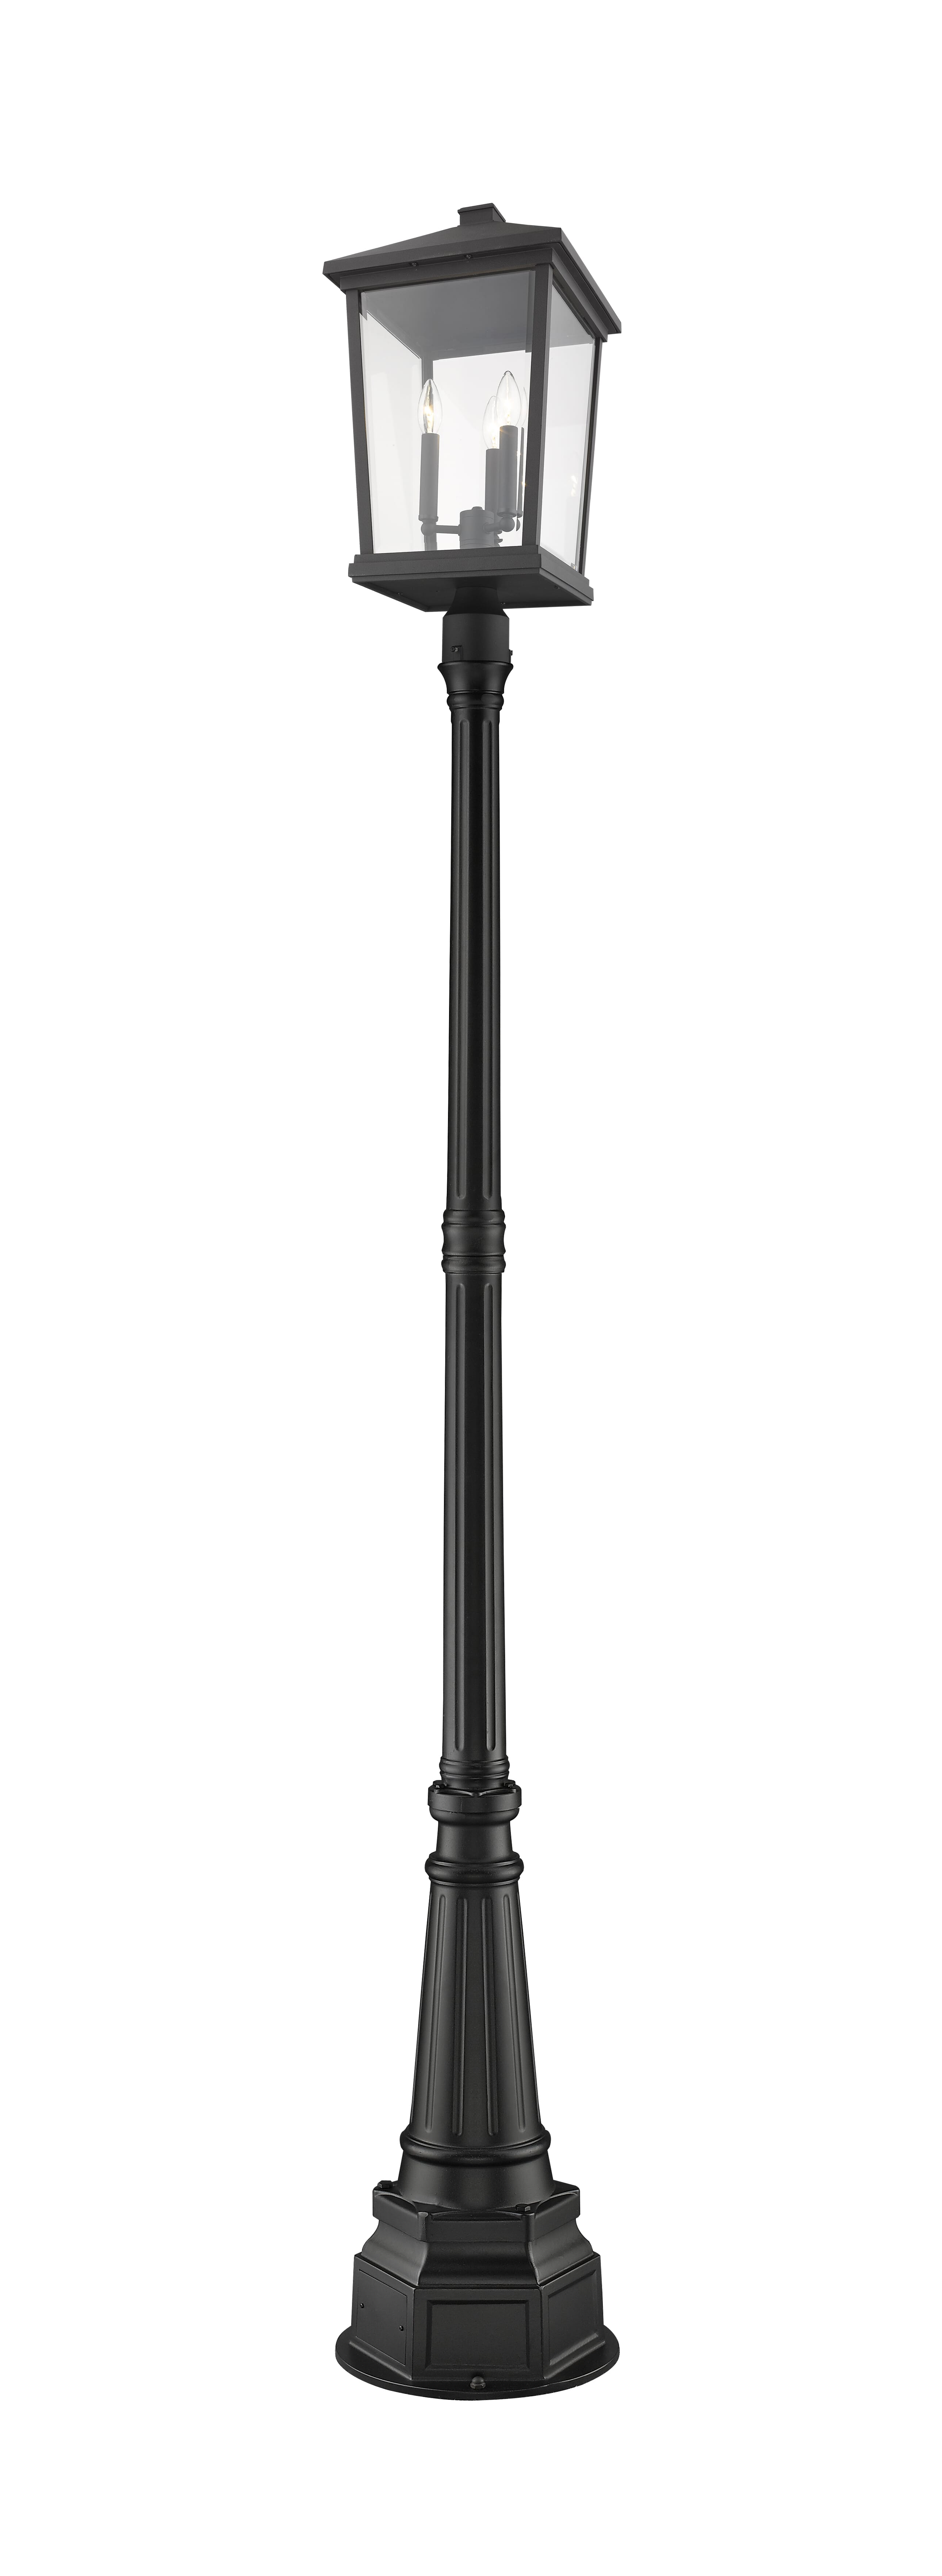 Beacon 3-Light Outdoor Post Mounted Fixture Light In Black